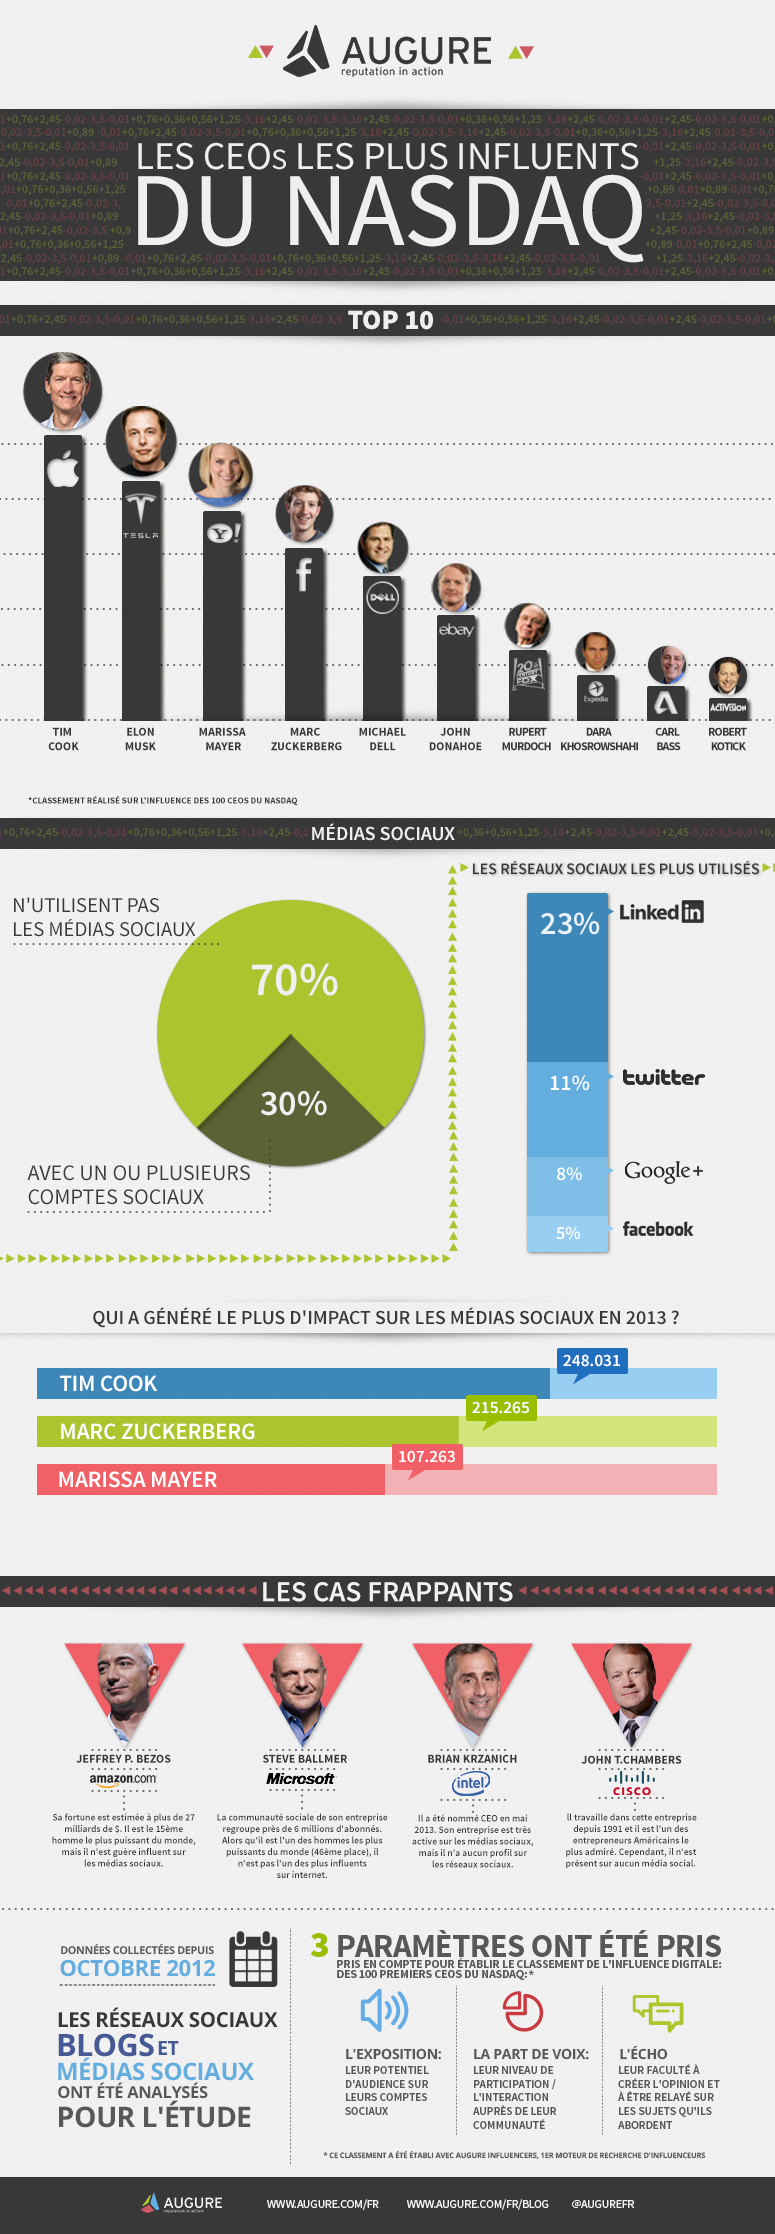 Infographie 77 - Etude Social Media patrons du NASDAQ